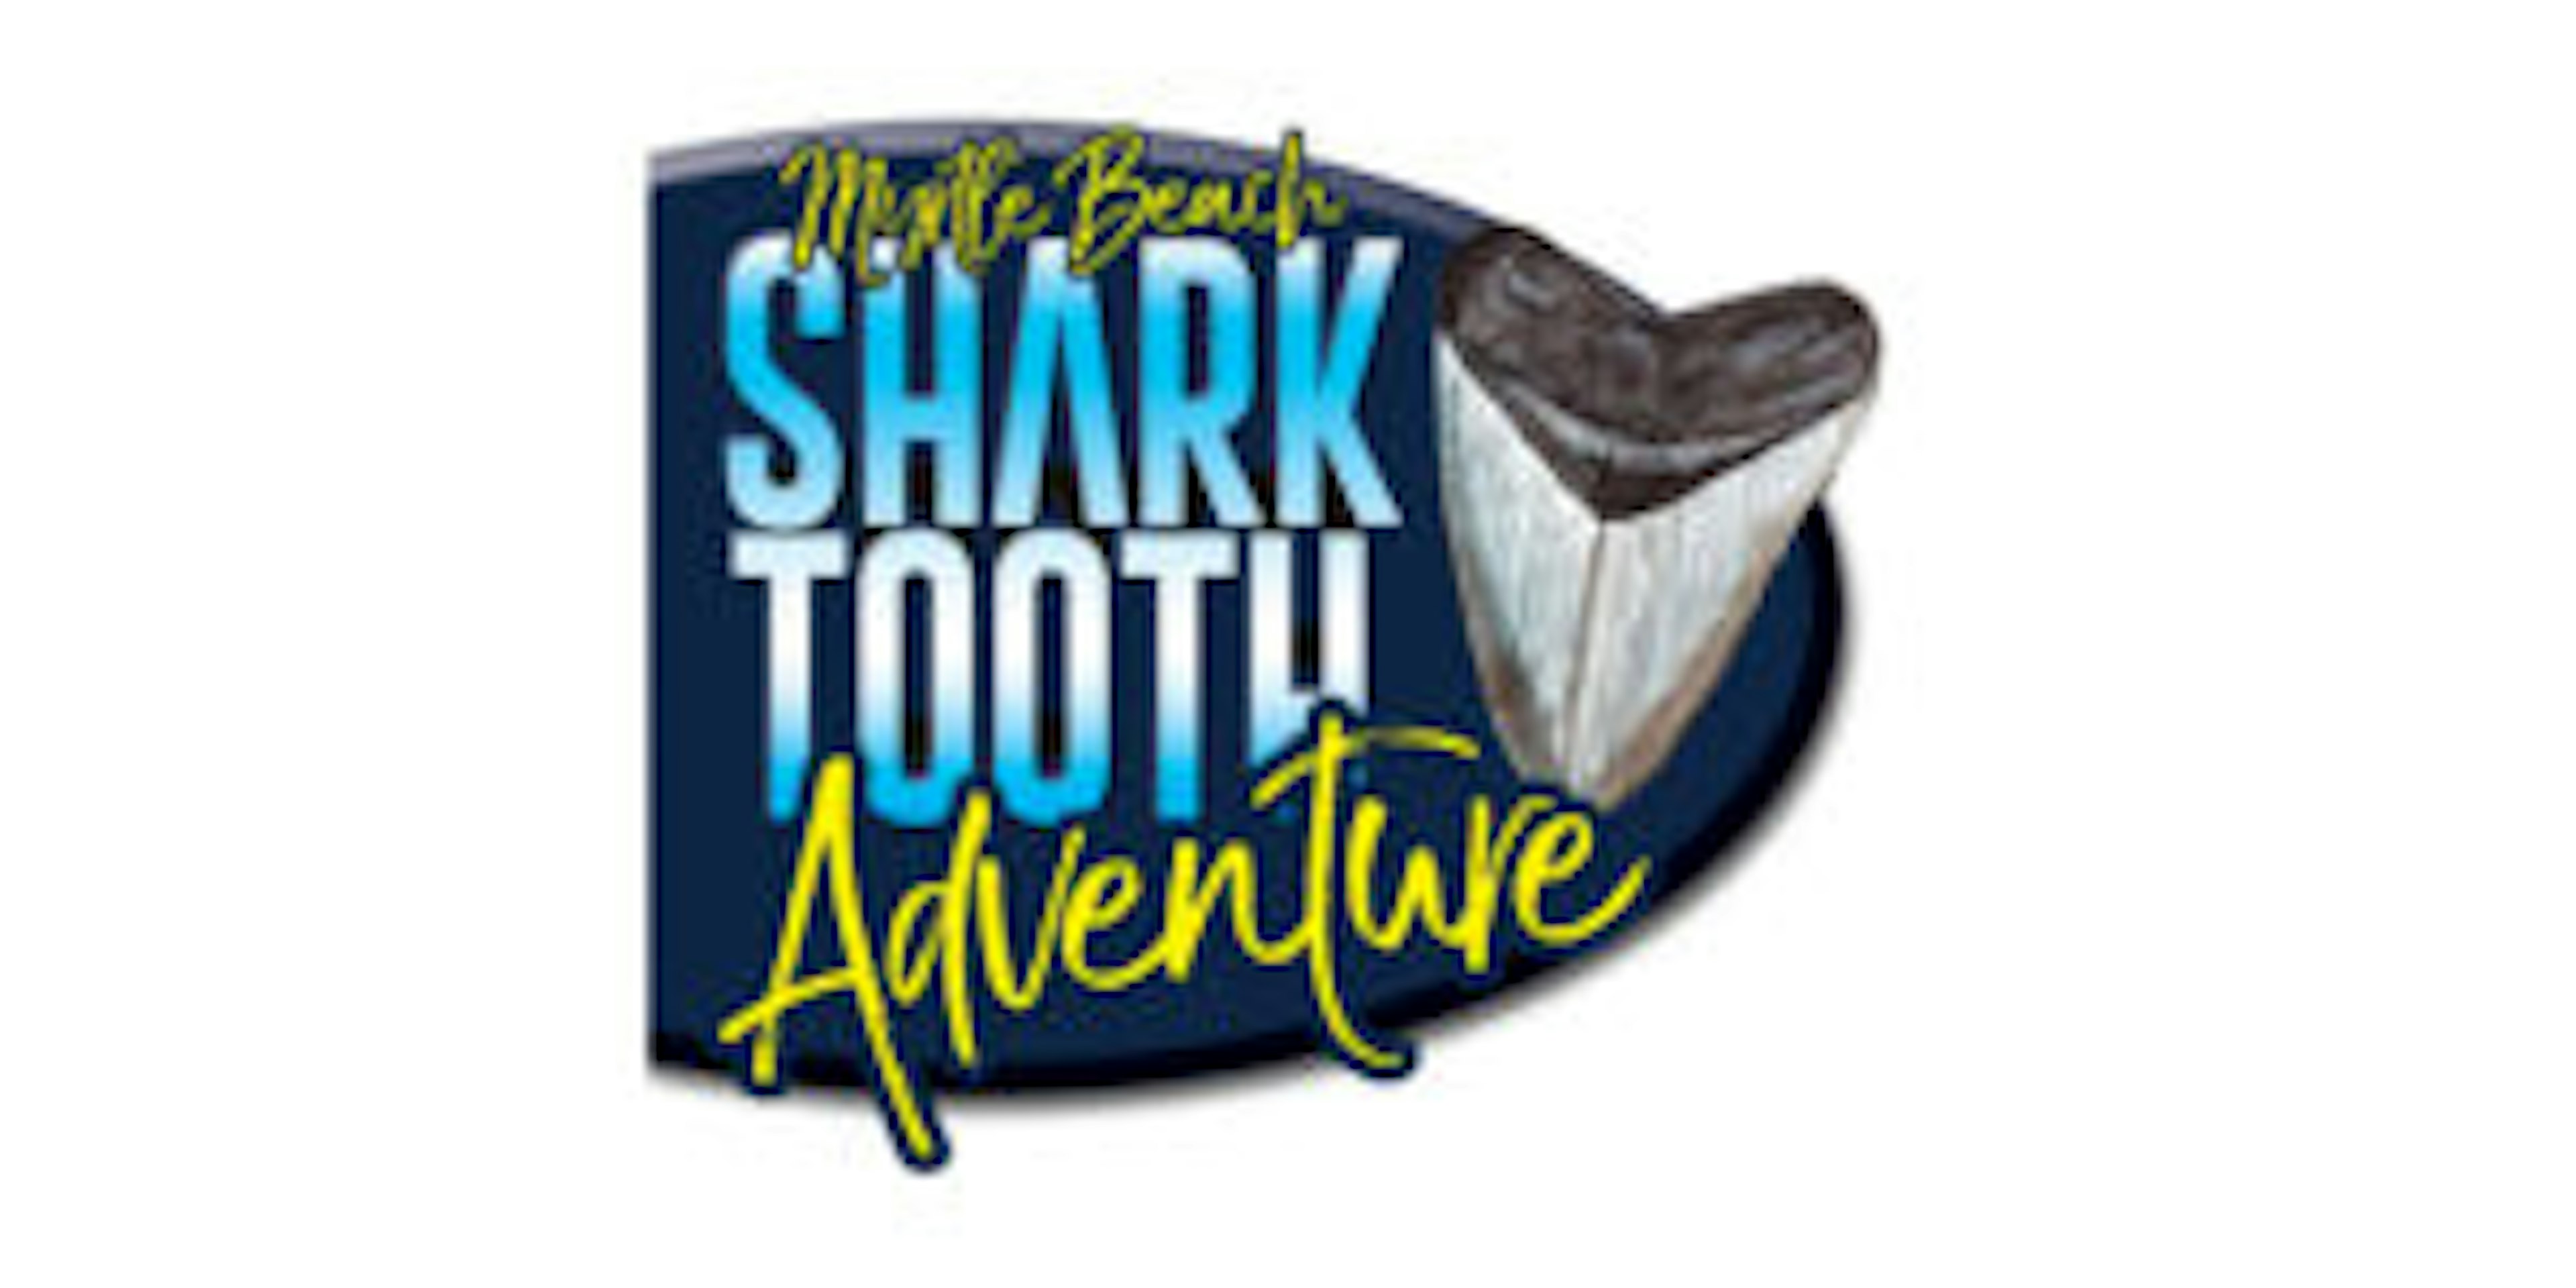 Myrtle Beach Shark Tooth Adventures